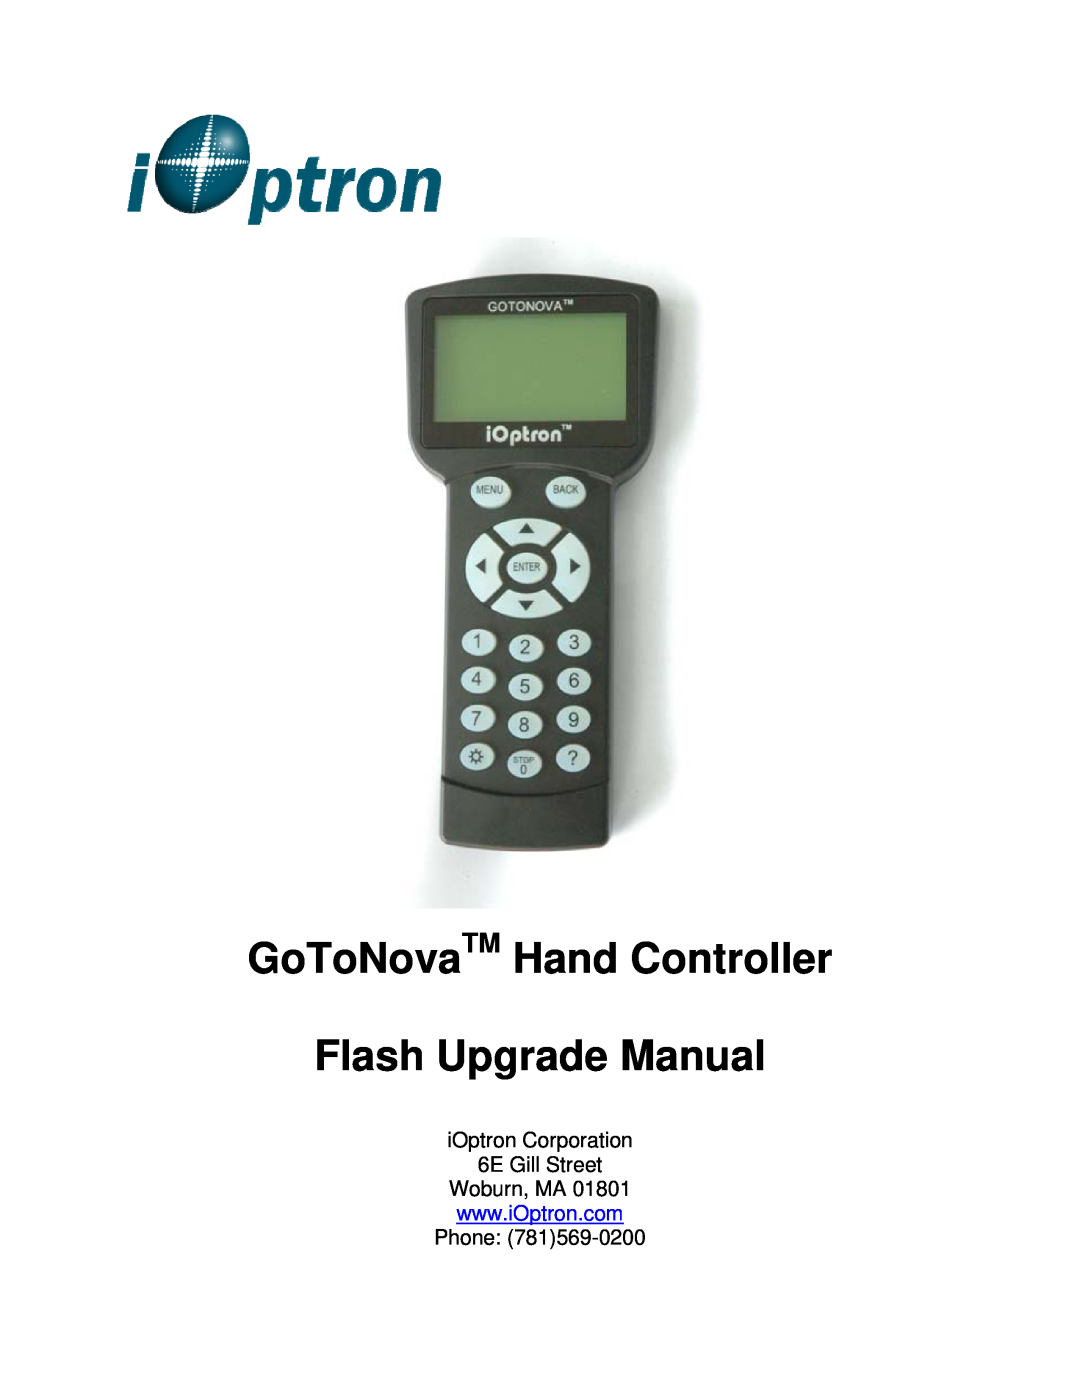 iOptron 8402A manual GoToNovaTM Hand Controller, Flash Upgrade Manual, iOptron Corporation 6E Gill Street Woburn, MA 